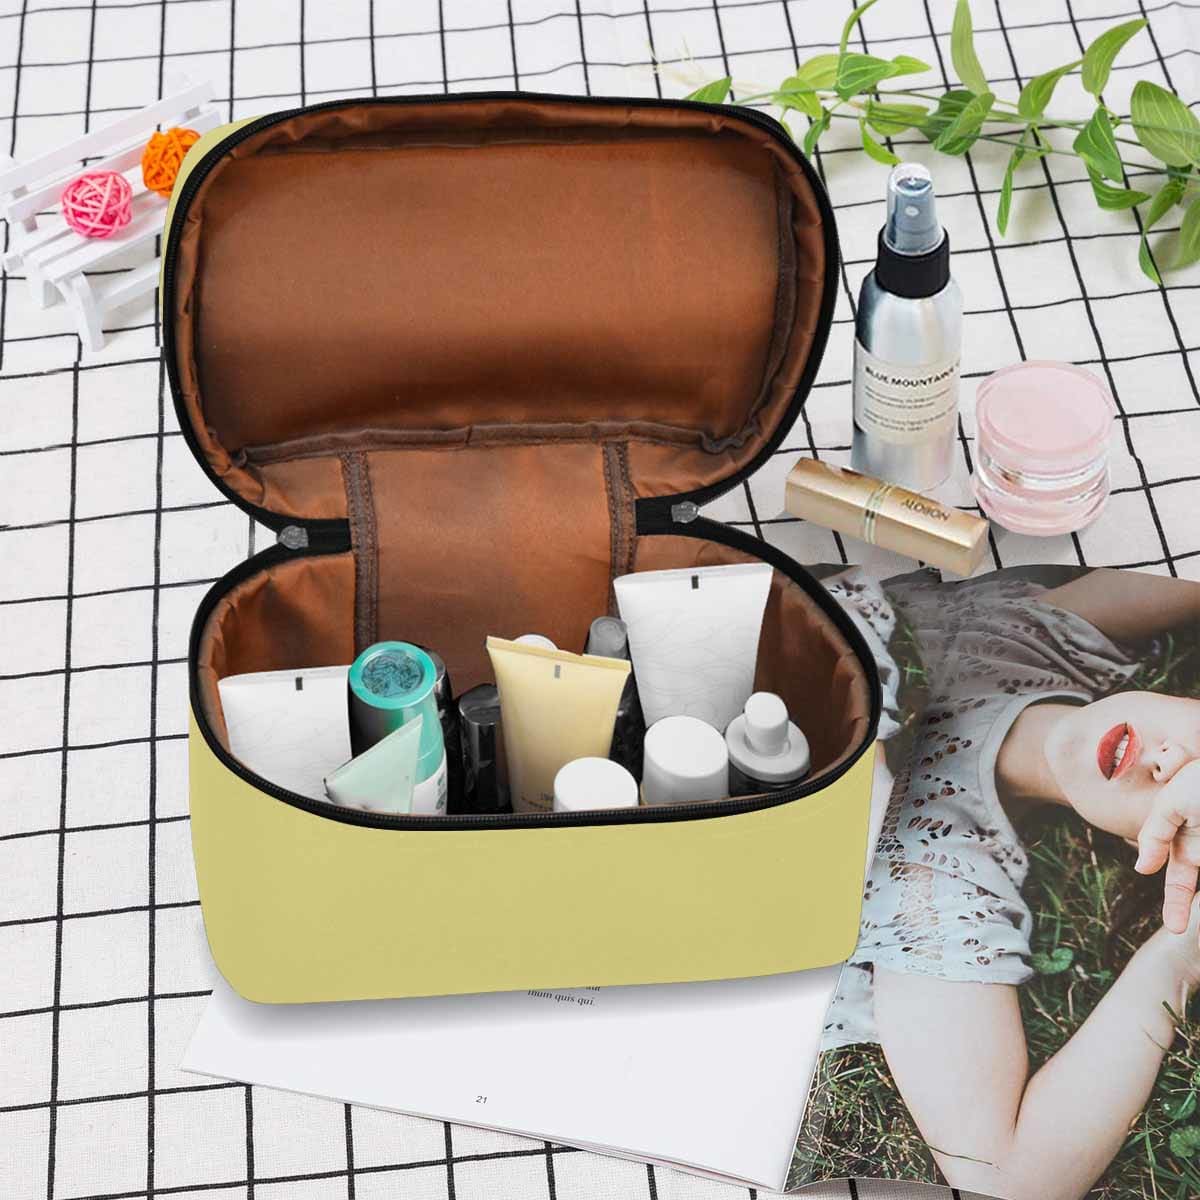 Cosmetic Bag Khaki Yellow Travel Case - Bags | Cosmetic Bags